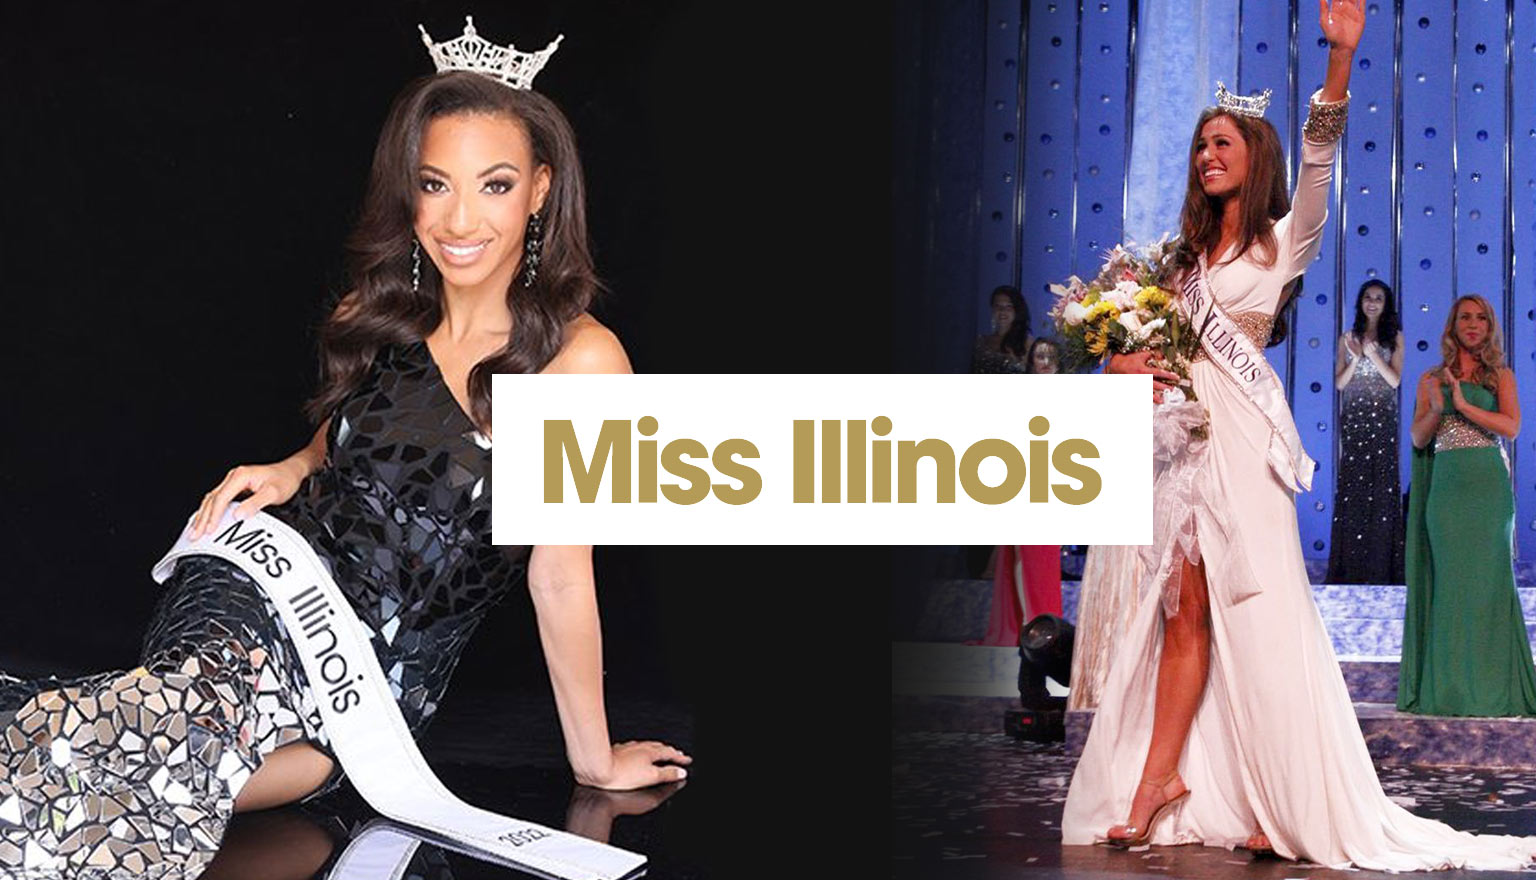 Miss Illinois Pageant at Marion Illinois Civic Center